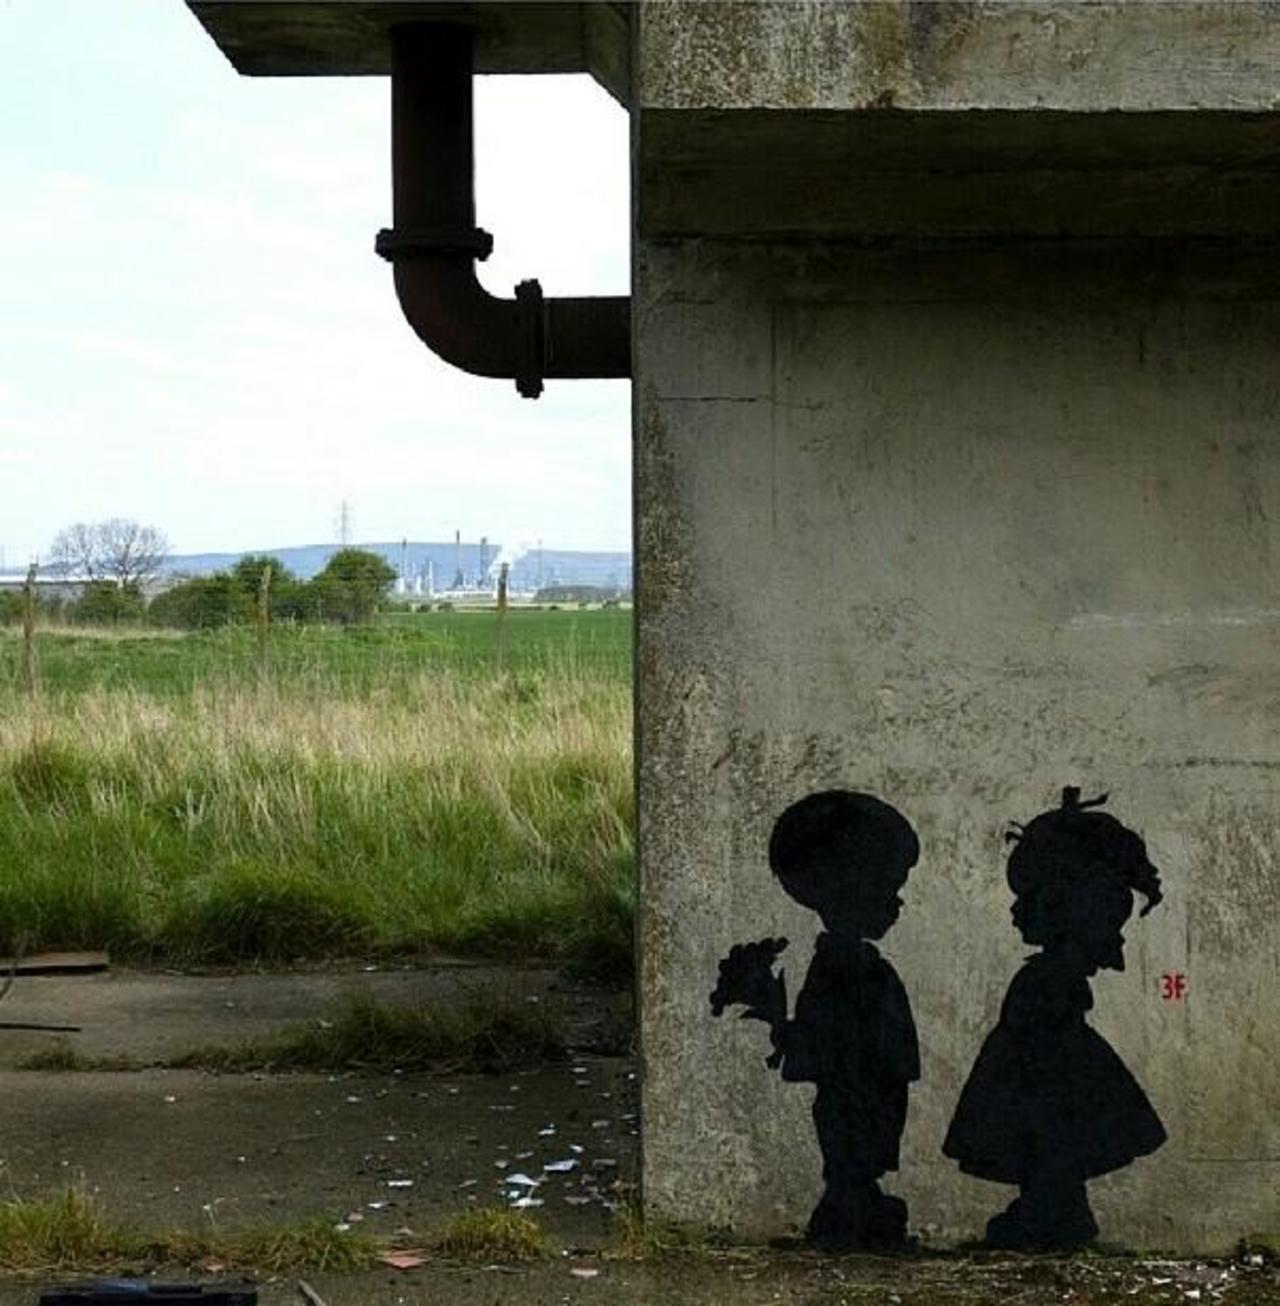 Found love in a hopeless place!

Street Art by 3fountains 

#art #mural #graffiti #streetart http://t.co/SPnS40h6zf